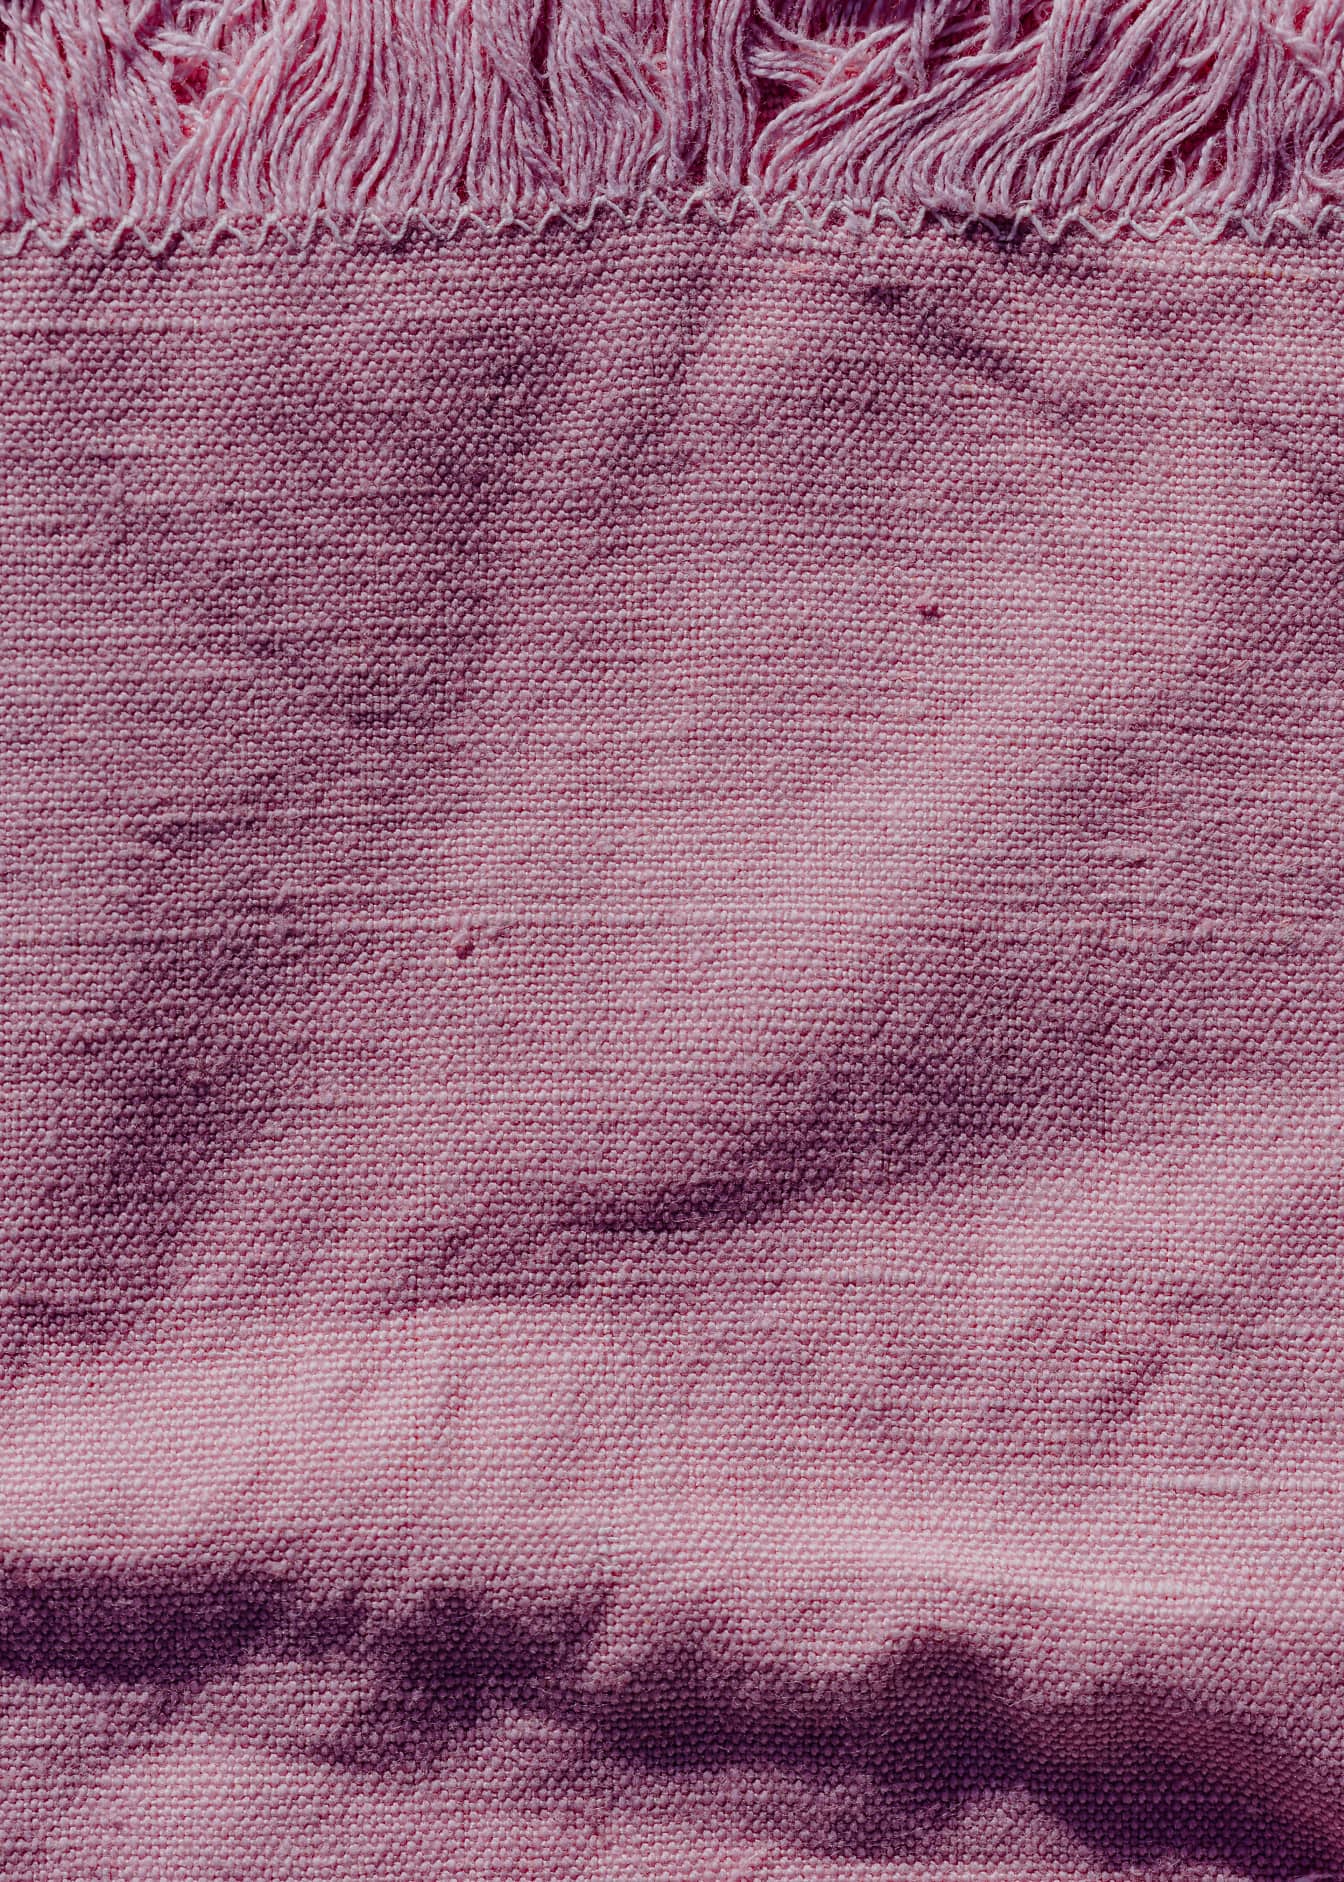 Tekstur af et groft linnedrosa stof med frynser på kanten